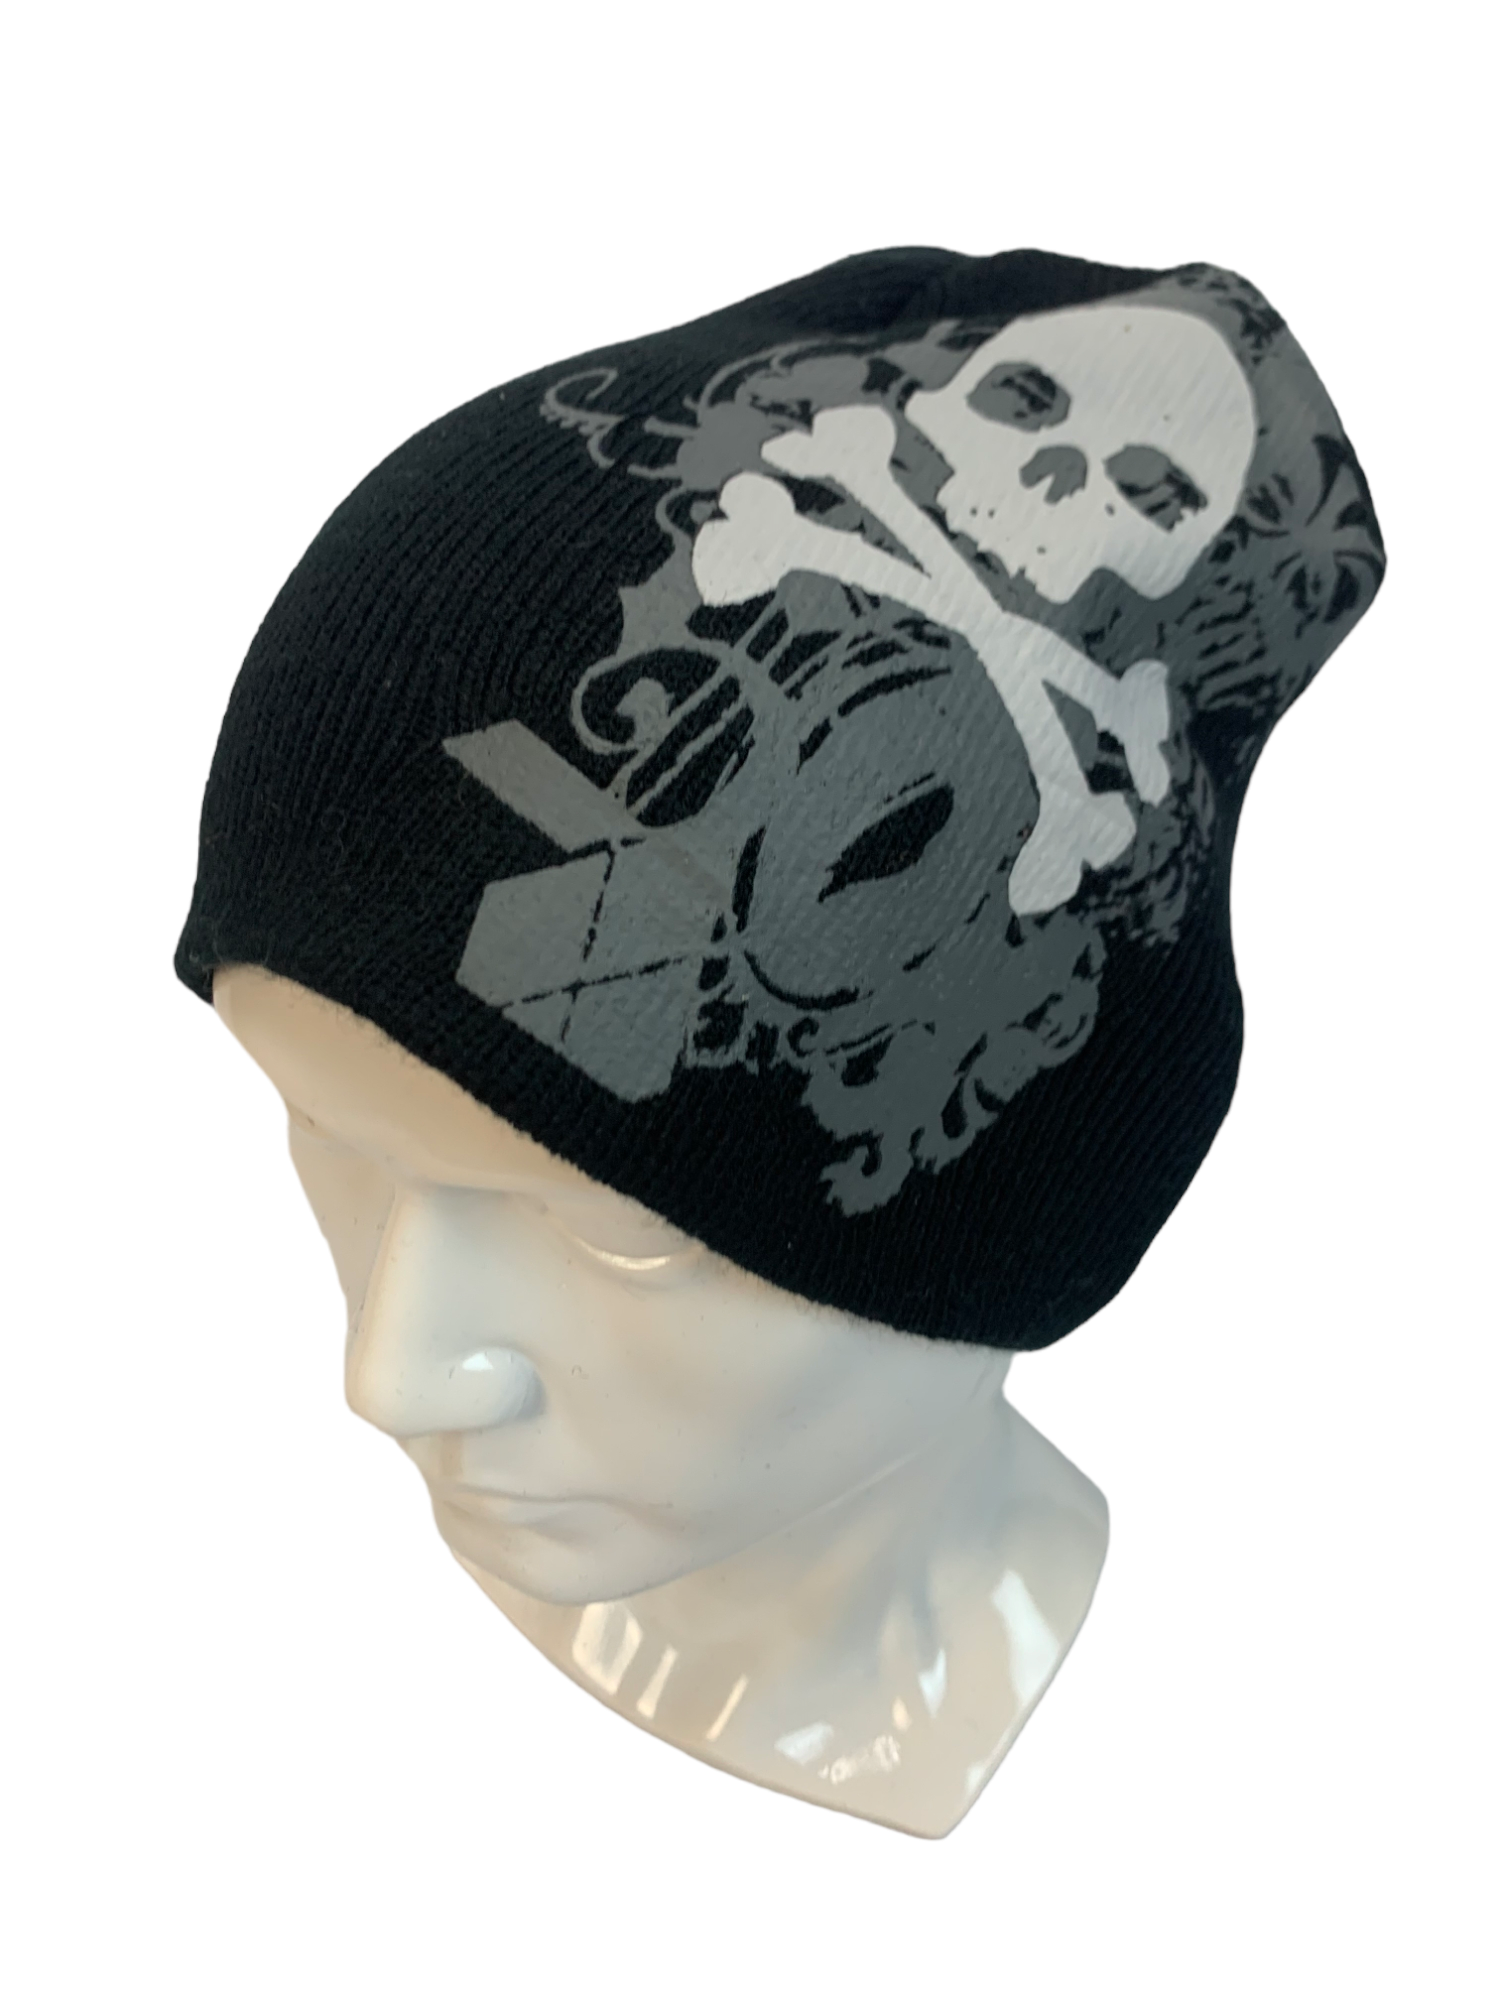 Skulls - SEDITIONARIES X SKULLS DESIGNER BEANIE HAT CAP - 1